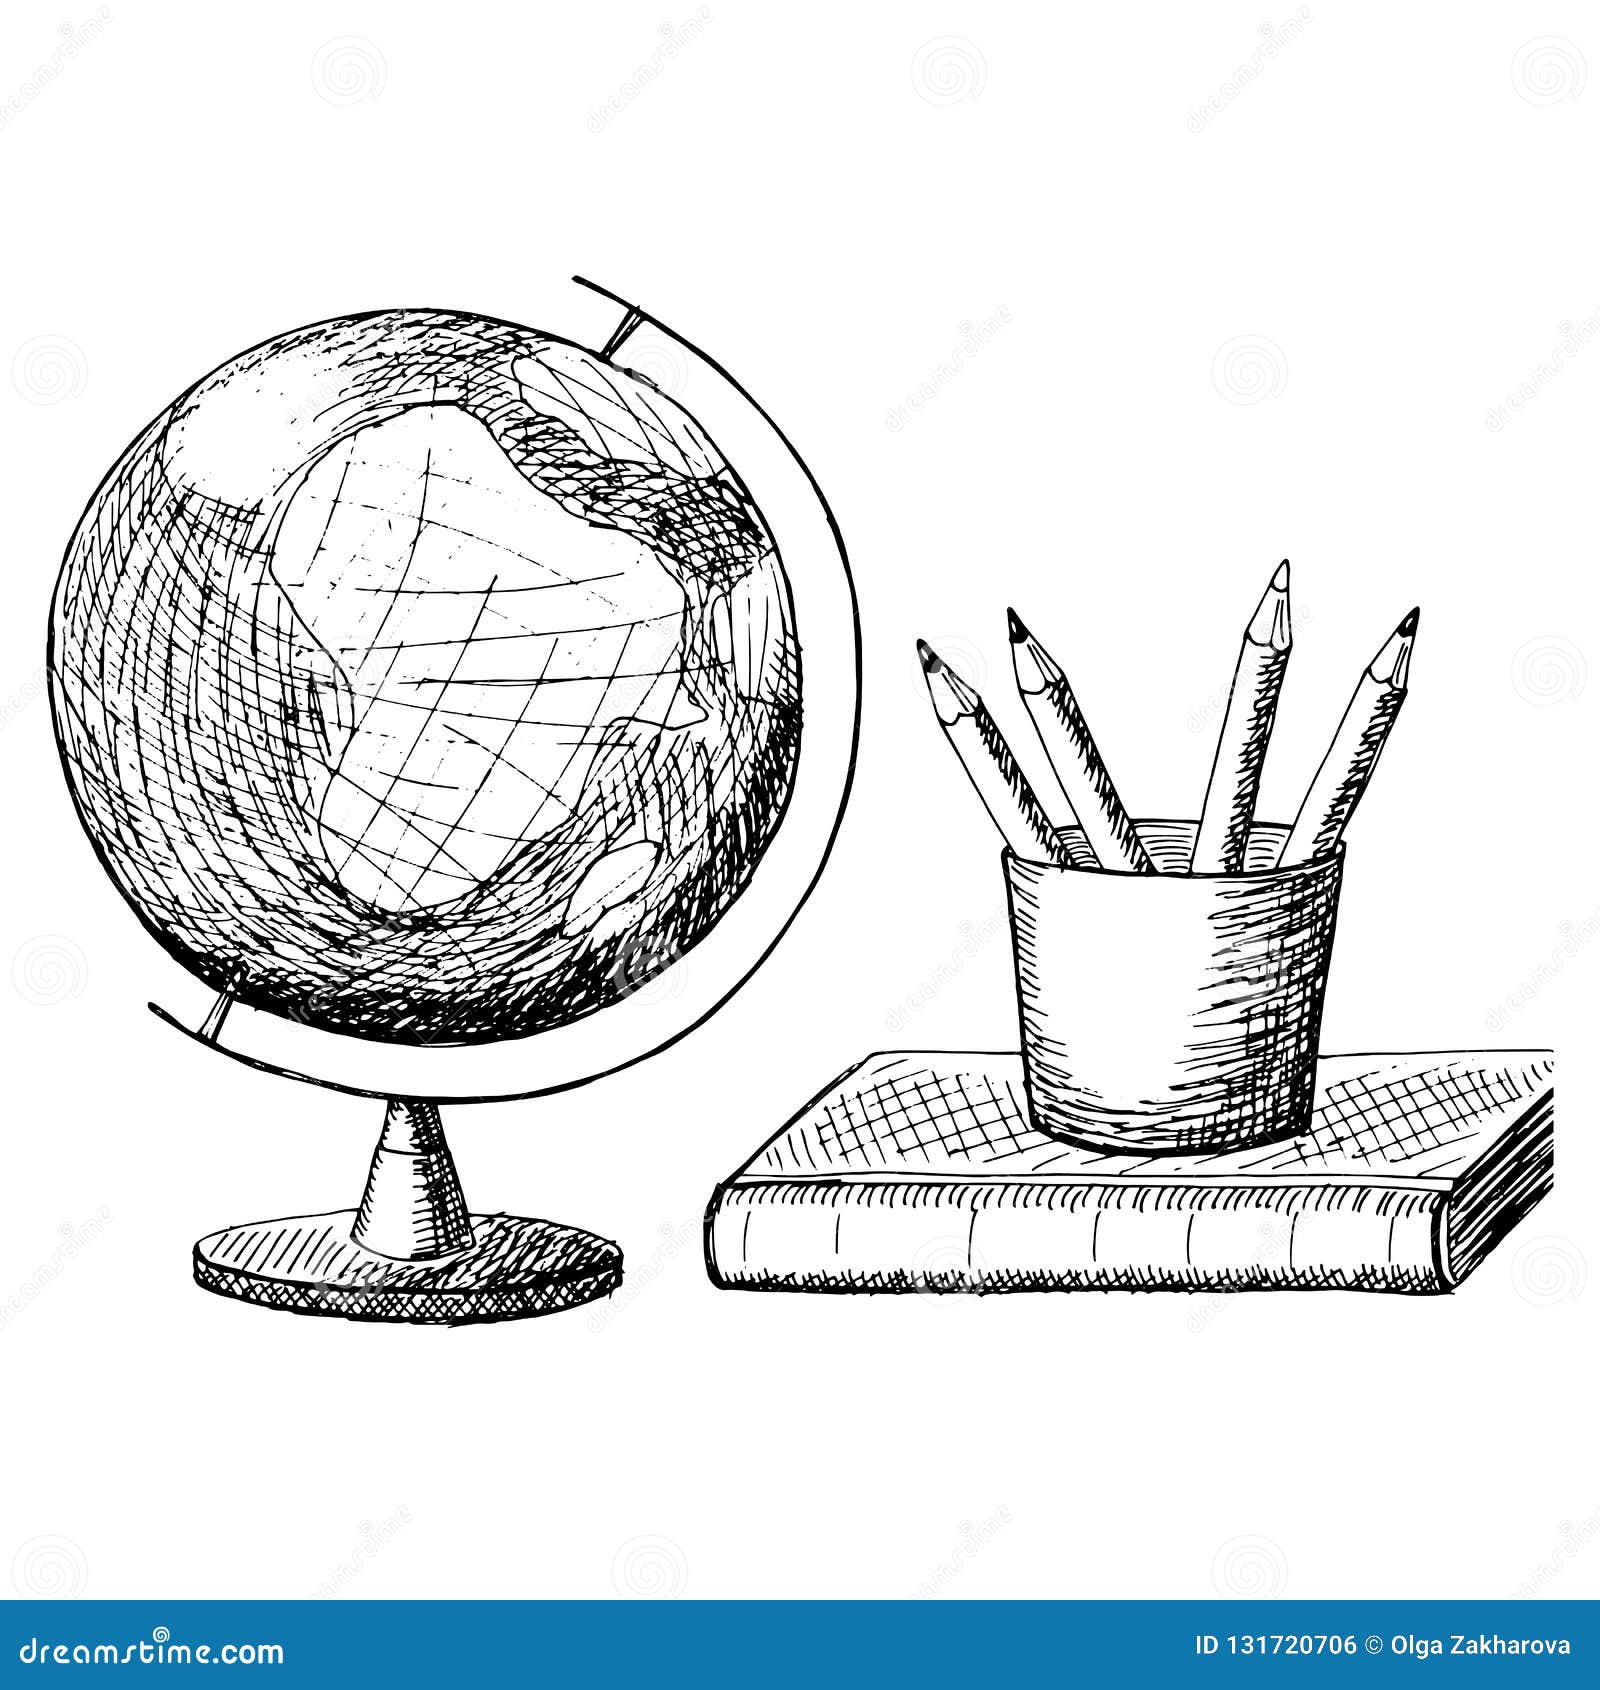 1800 World Map Pencil Illustrations RoyaltyFree Vector Graphics  Clip  Art  iStock  World map drawing Pencil shavings